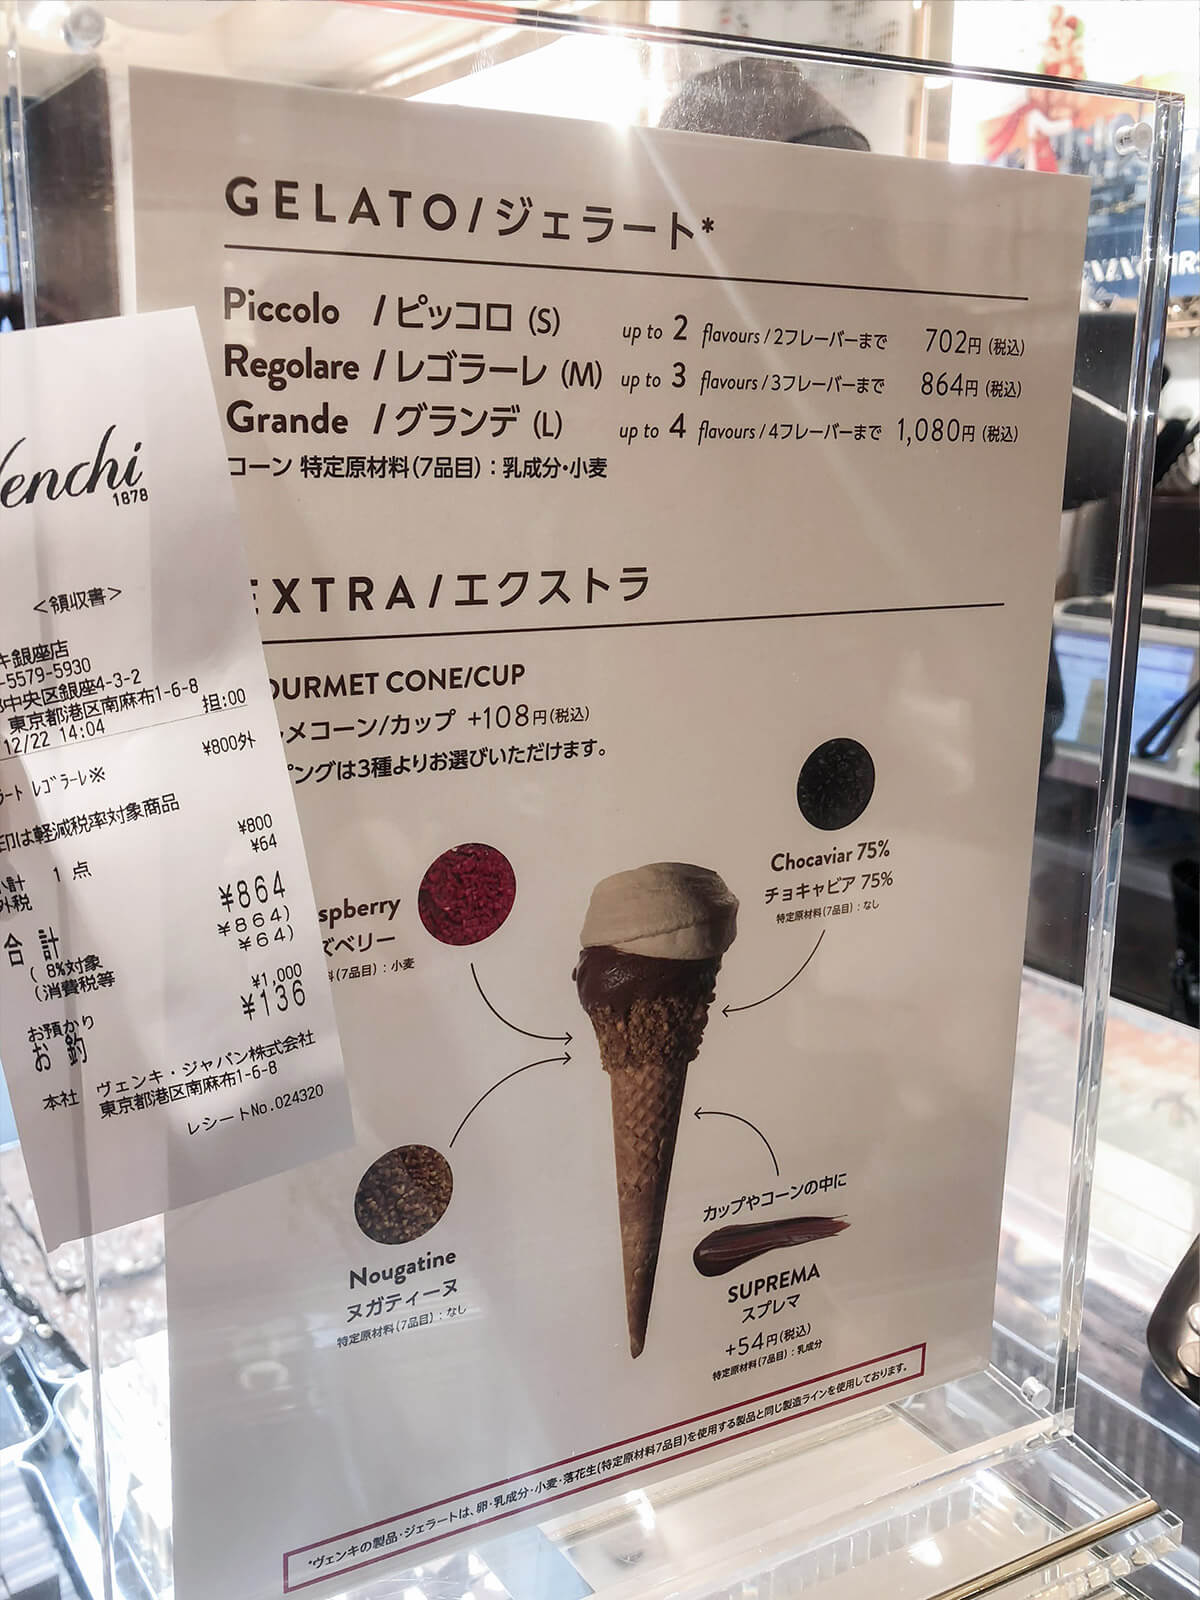 Venchi義式冰淇淋gelato-東京銀座門市價位